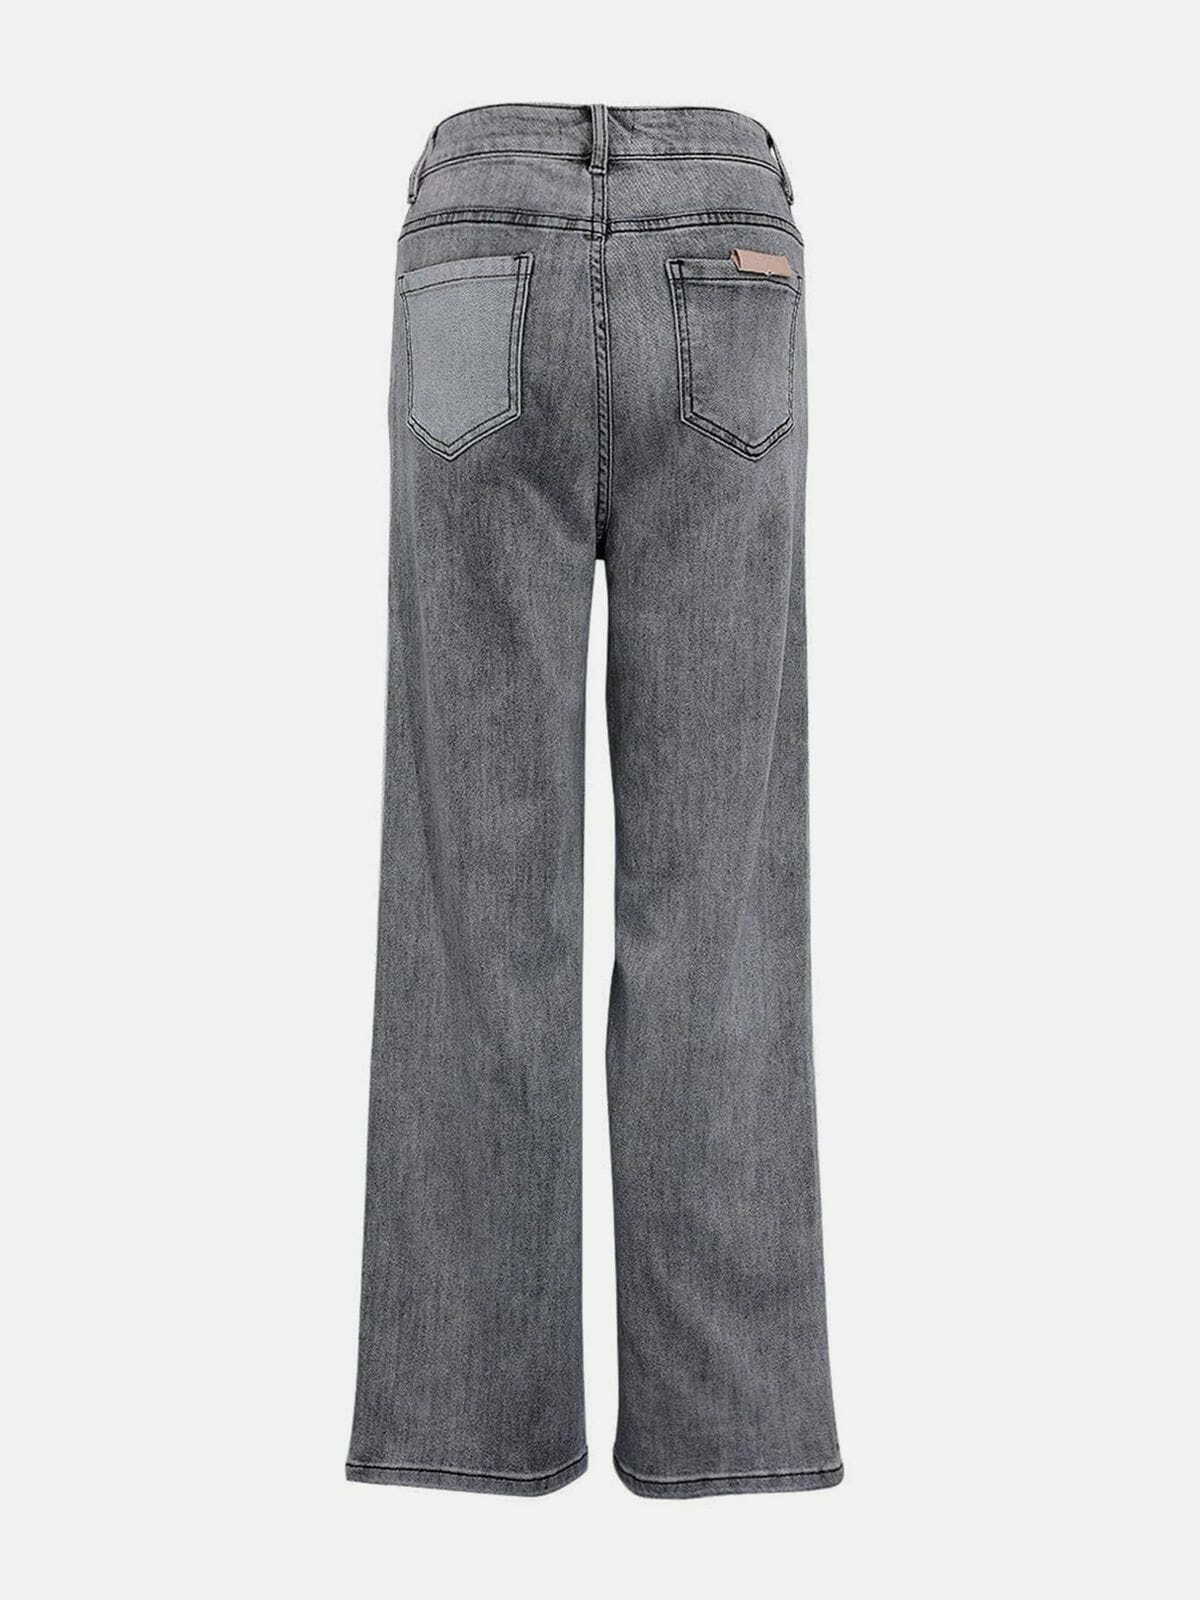 revolutionary patchwork jeans edgy & sleek streetwear 1718